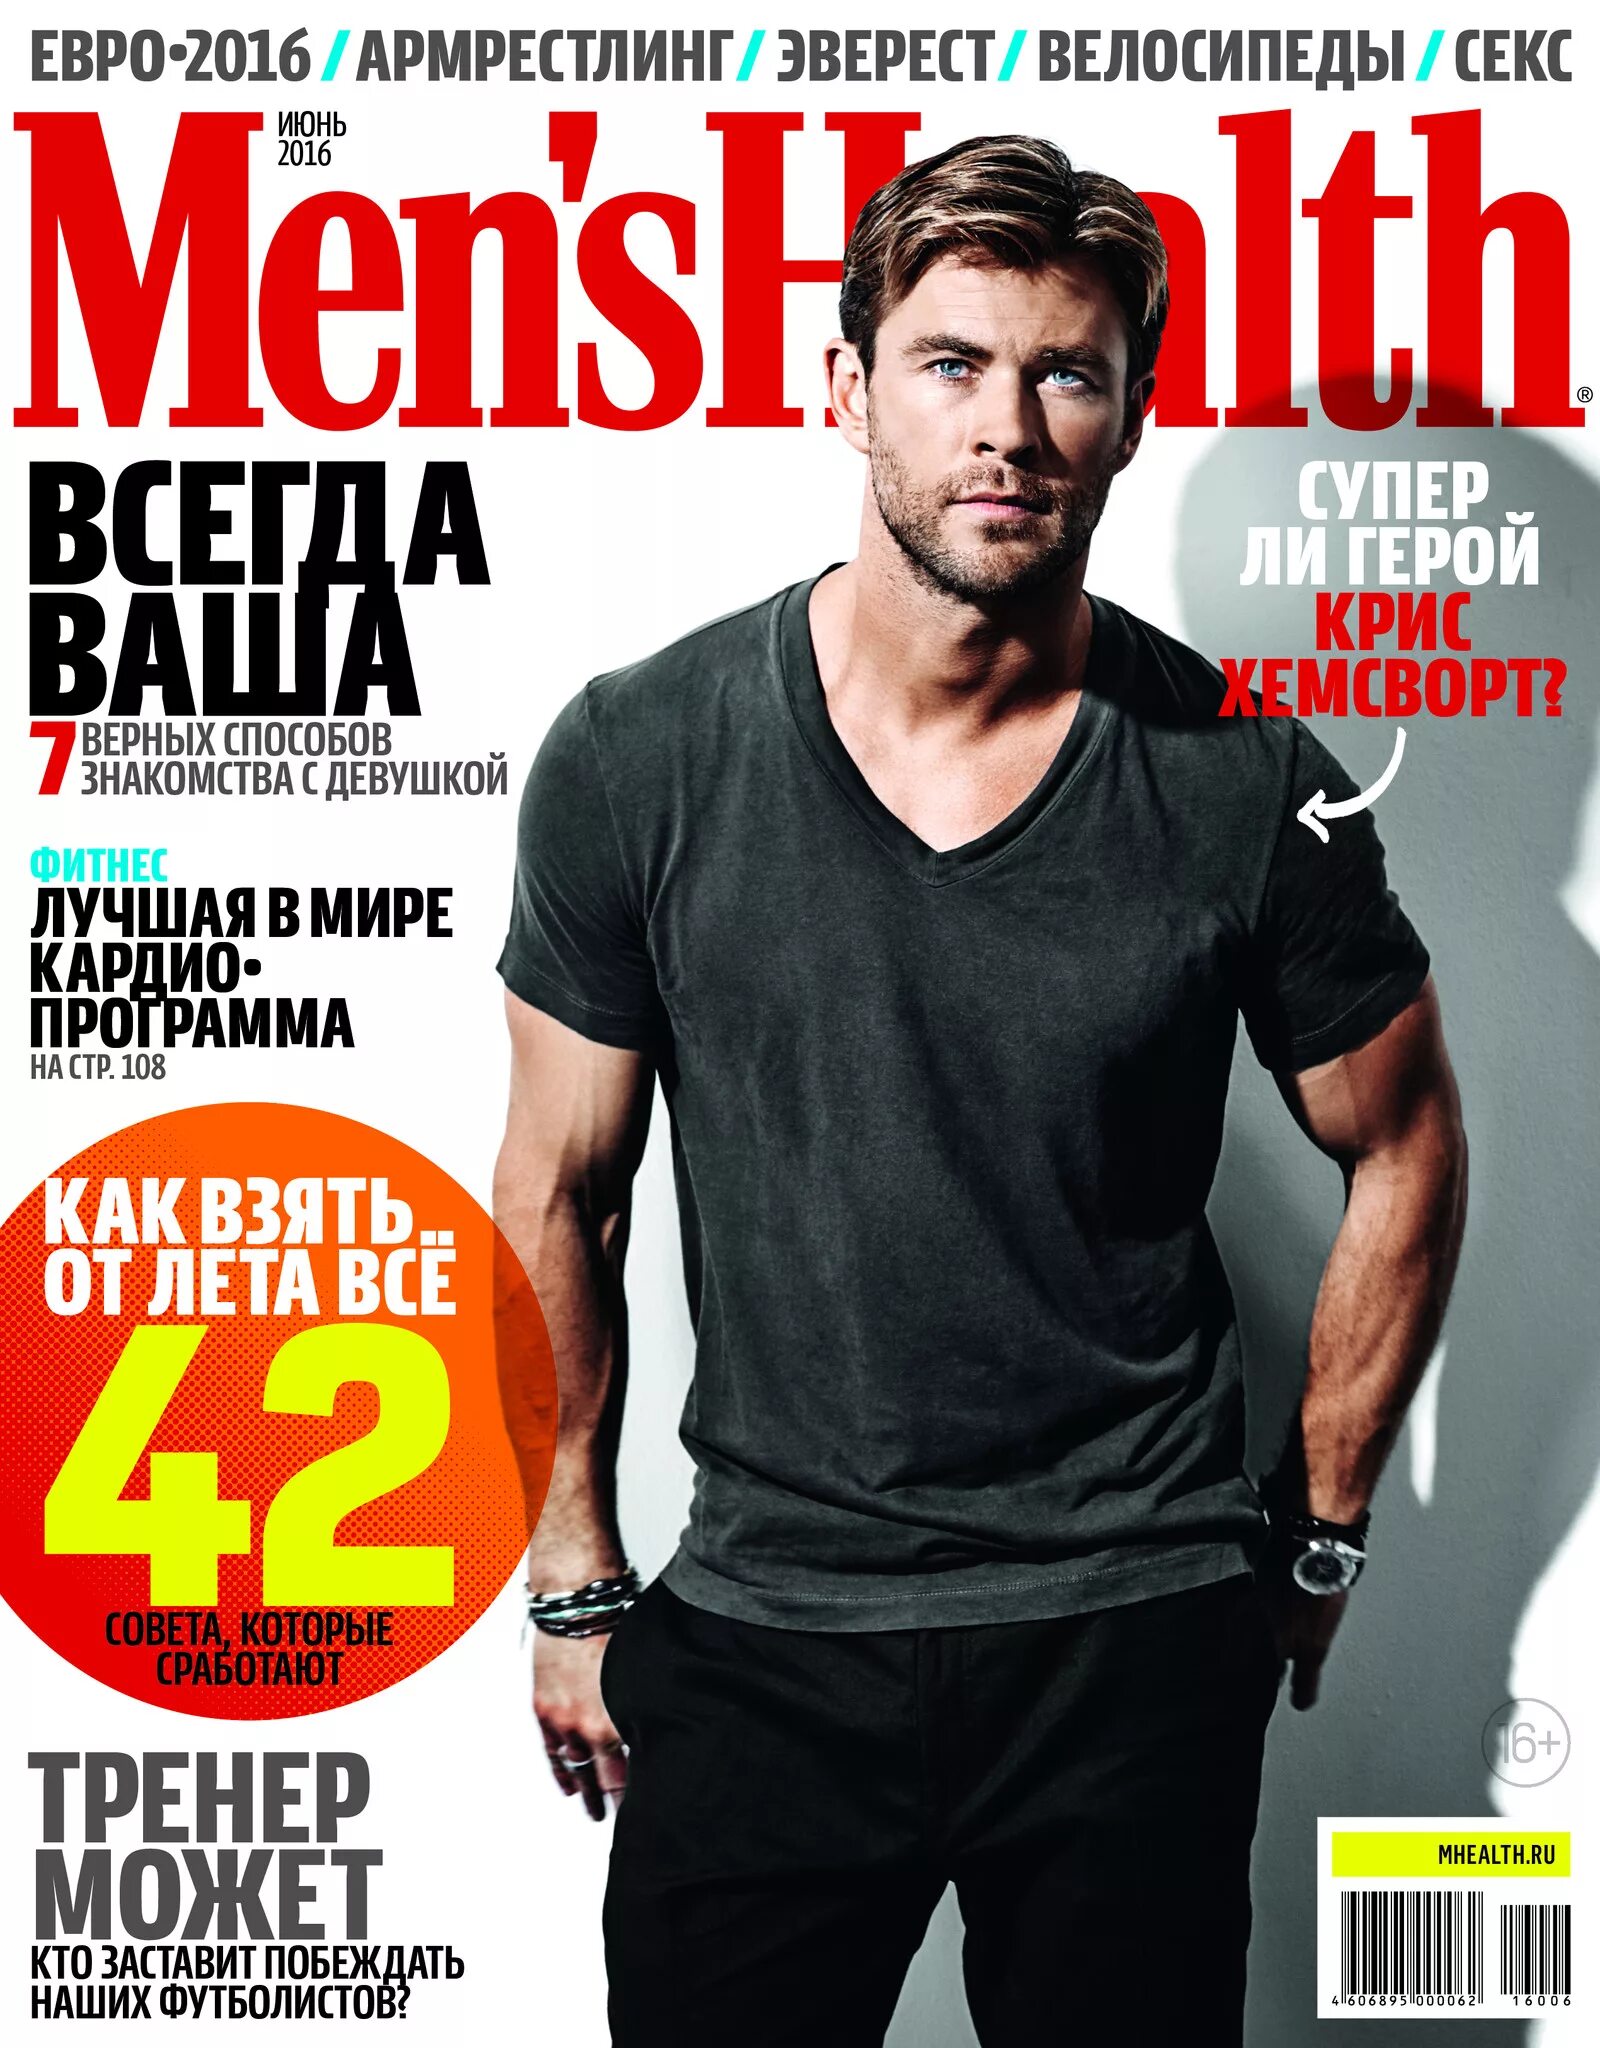 Men magazine. Журнал men's Health обложка. Обложки Менс Хелс Россия. Обложки men's Health Россия.